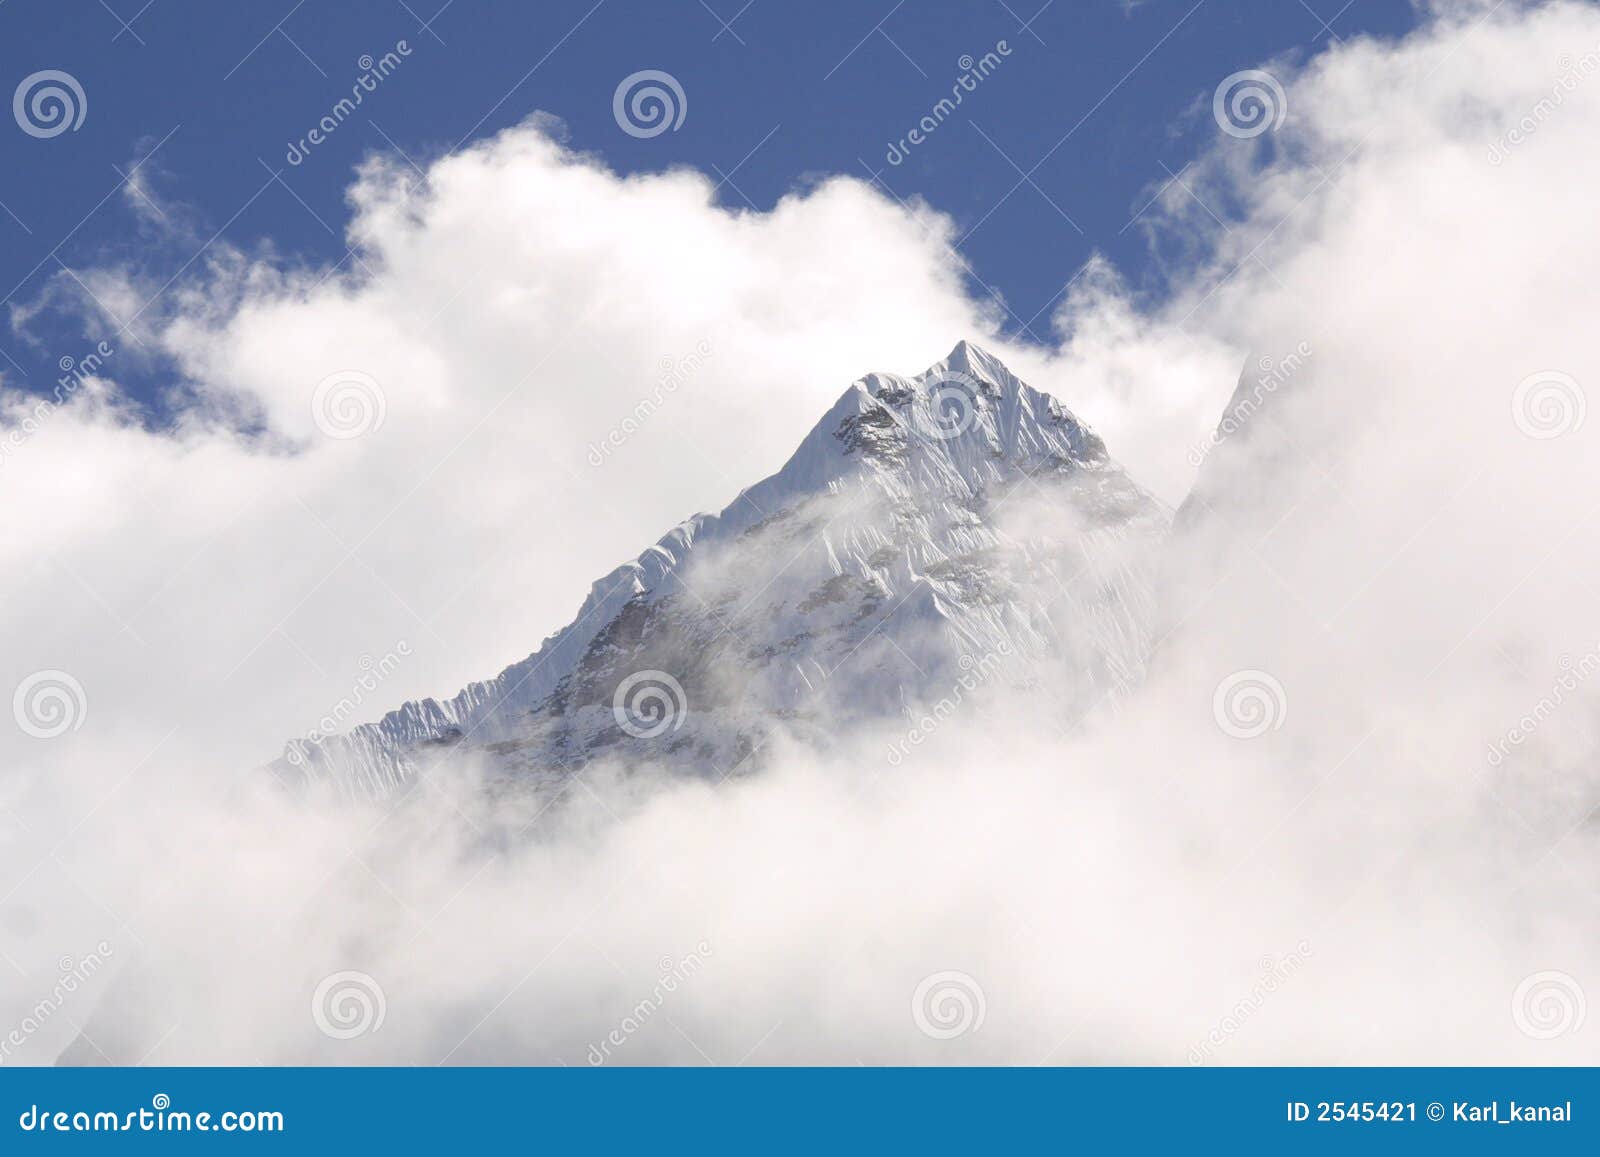 himalaya mountain peak